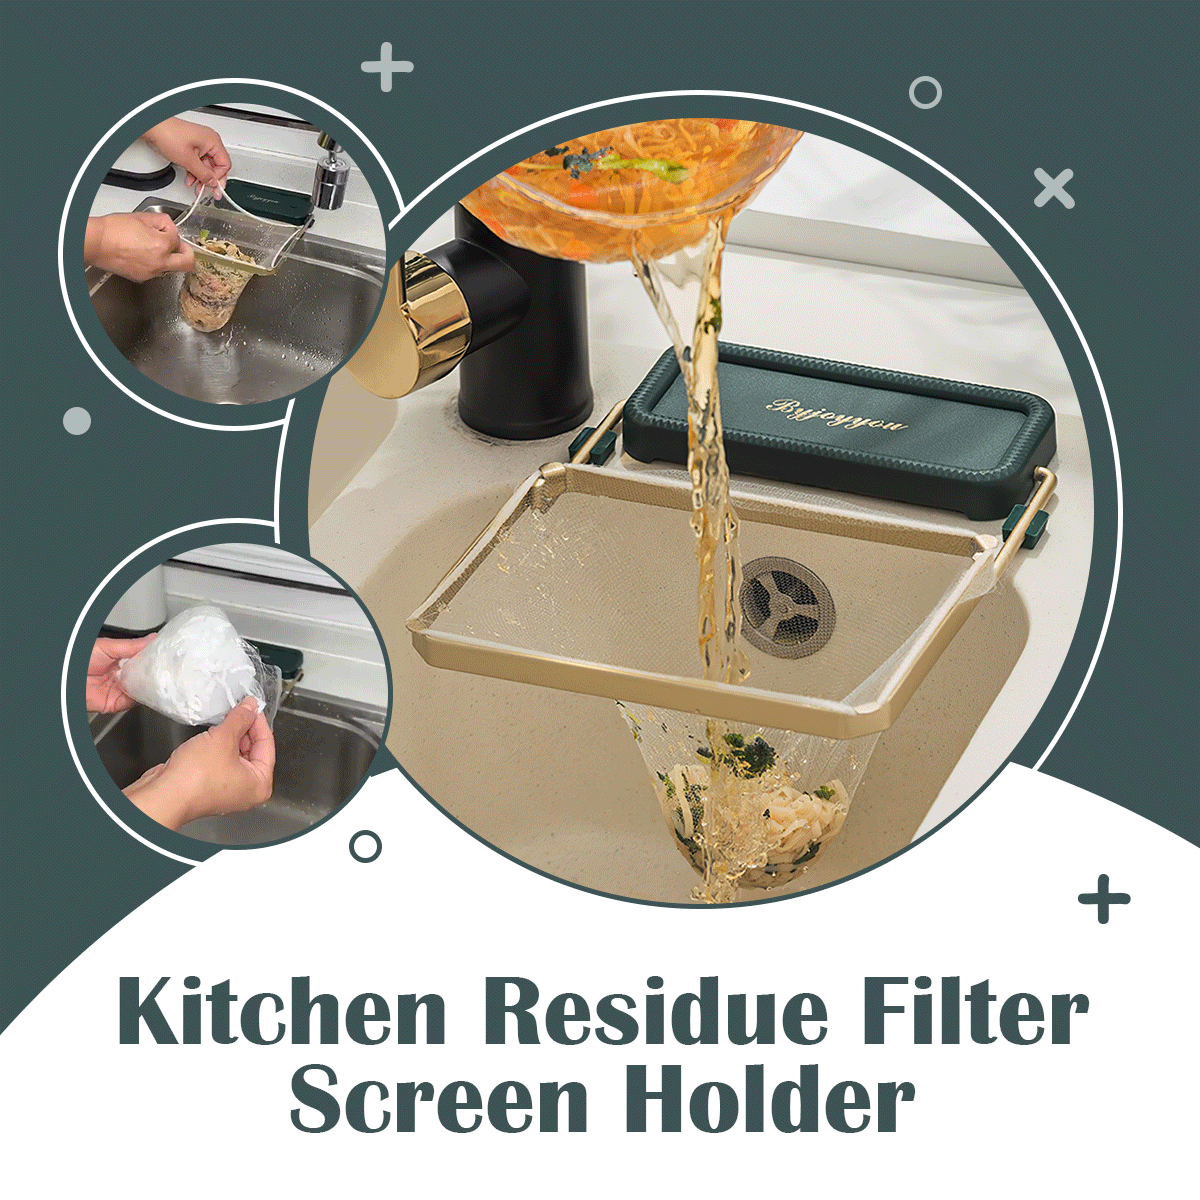 Kitchen Residue Filter Screen Holder